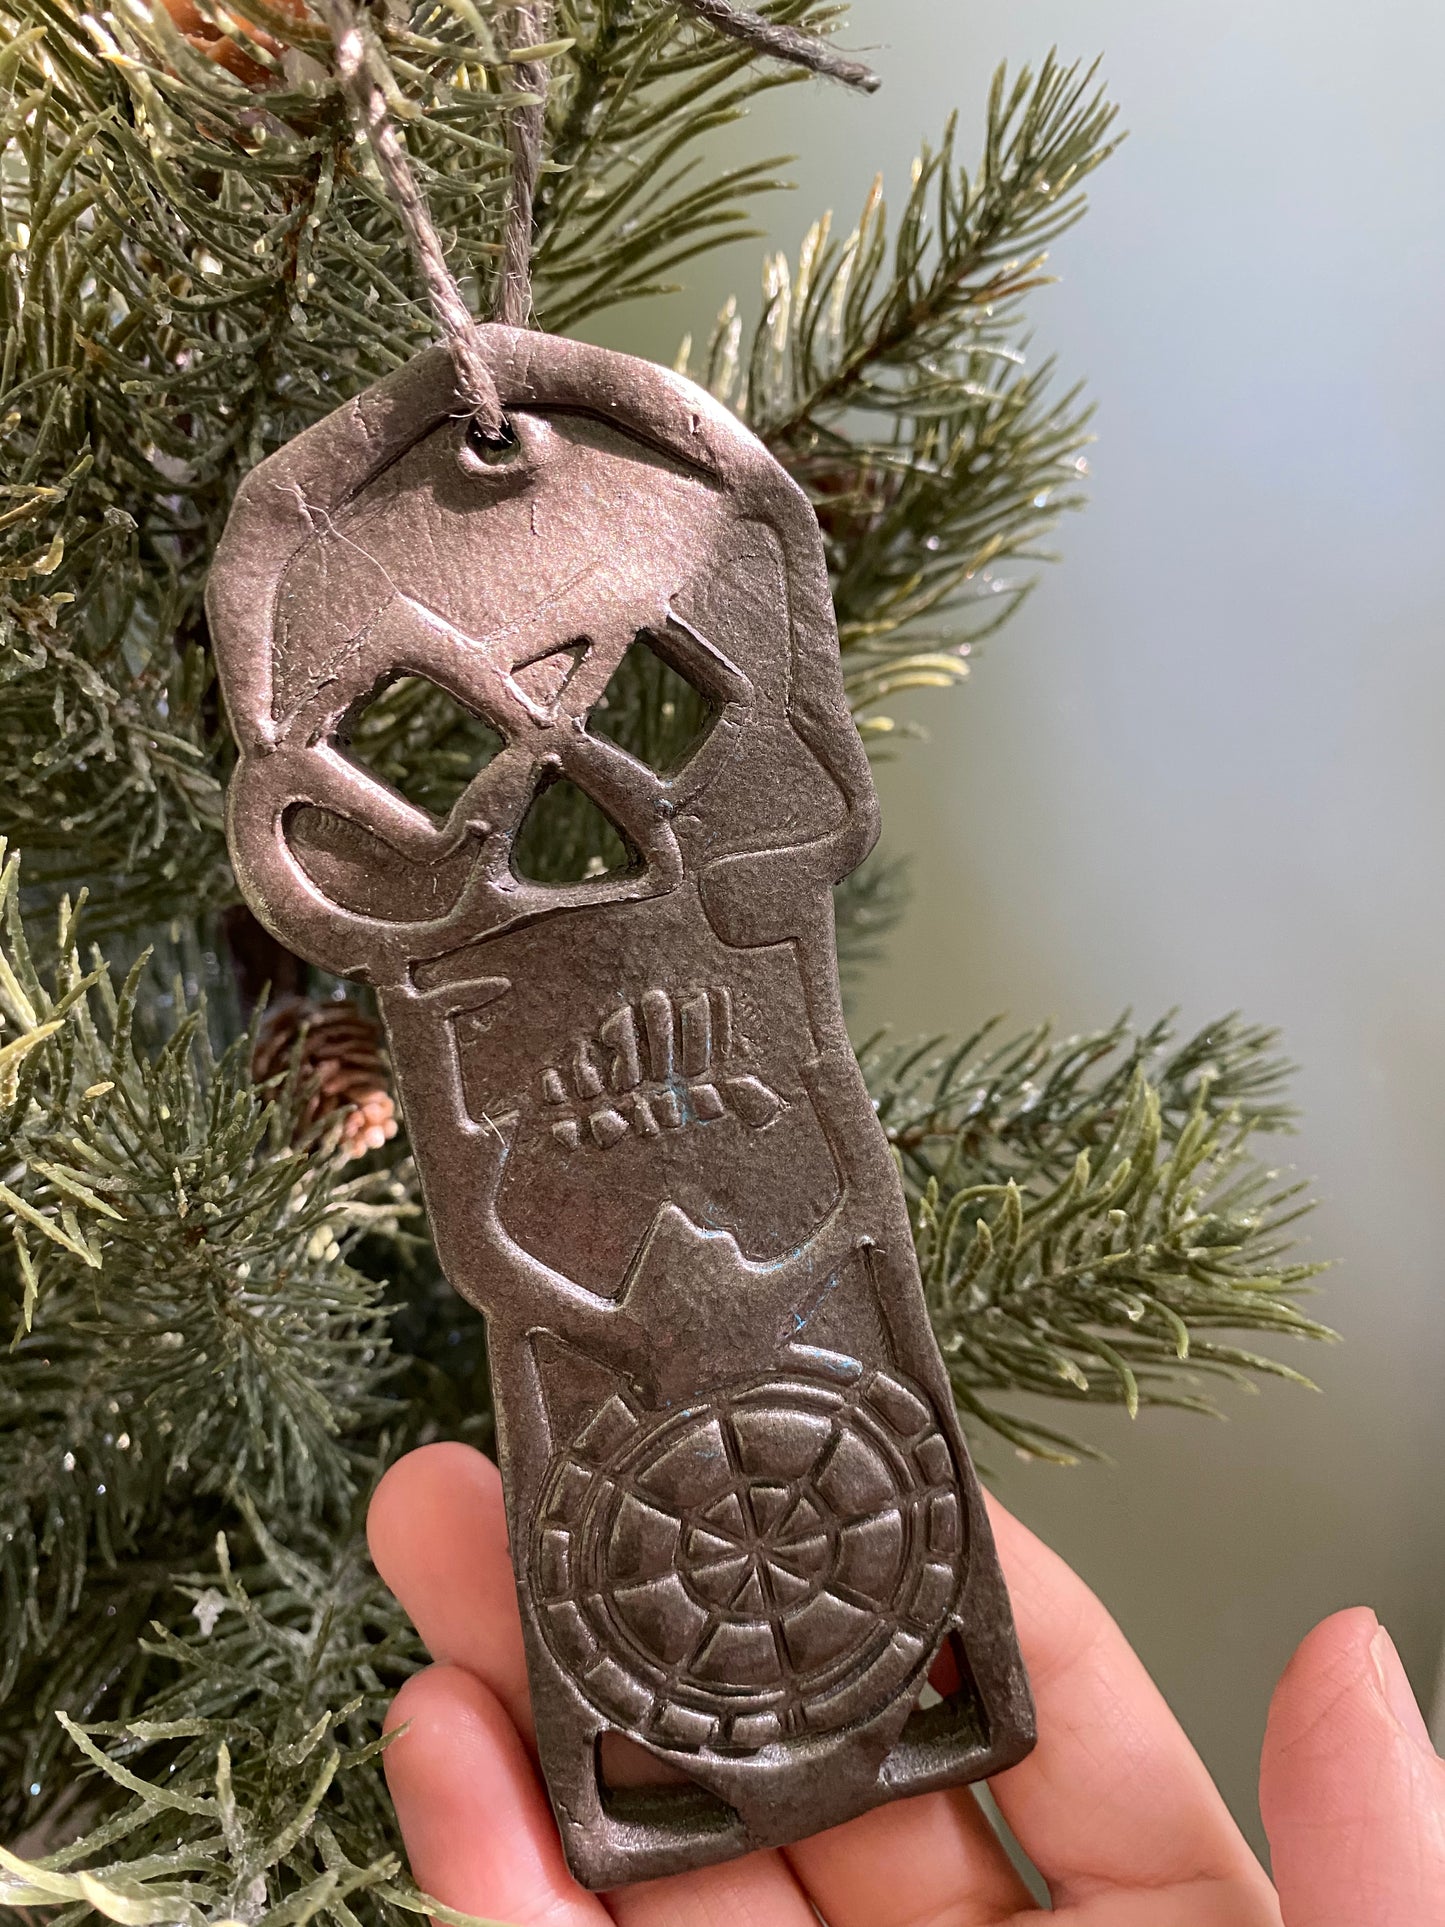 Goonies Replica Copper Bones Skeleton key and Doubloon ornament set